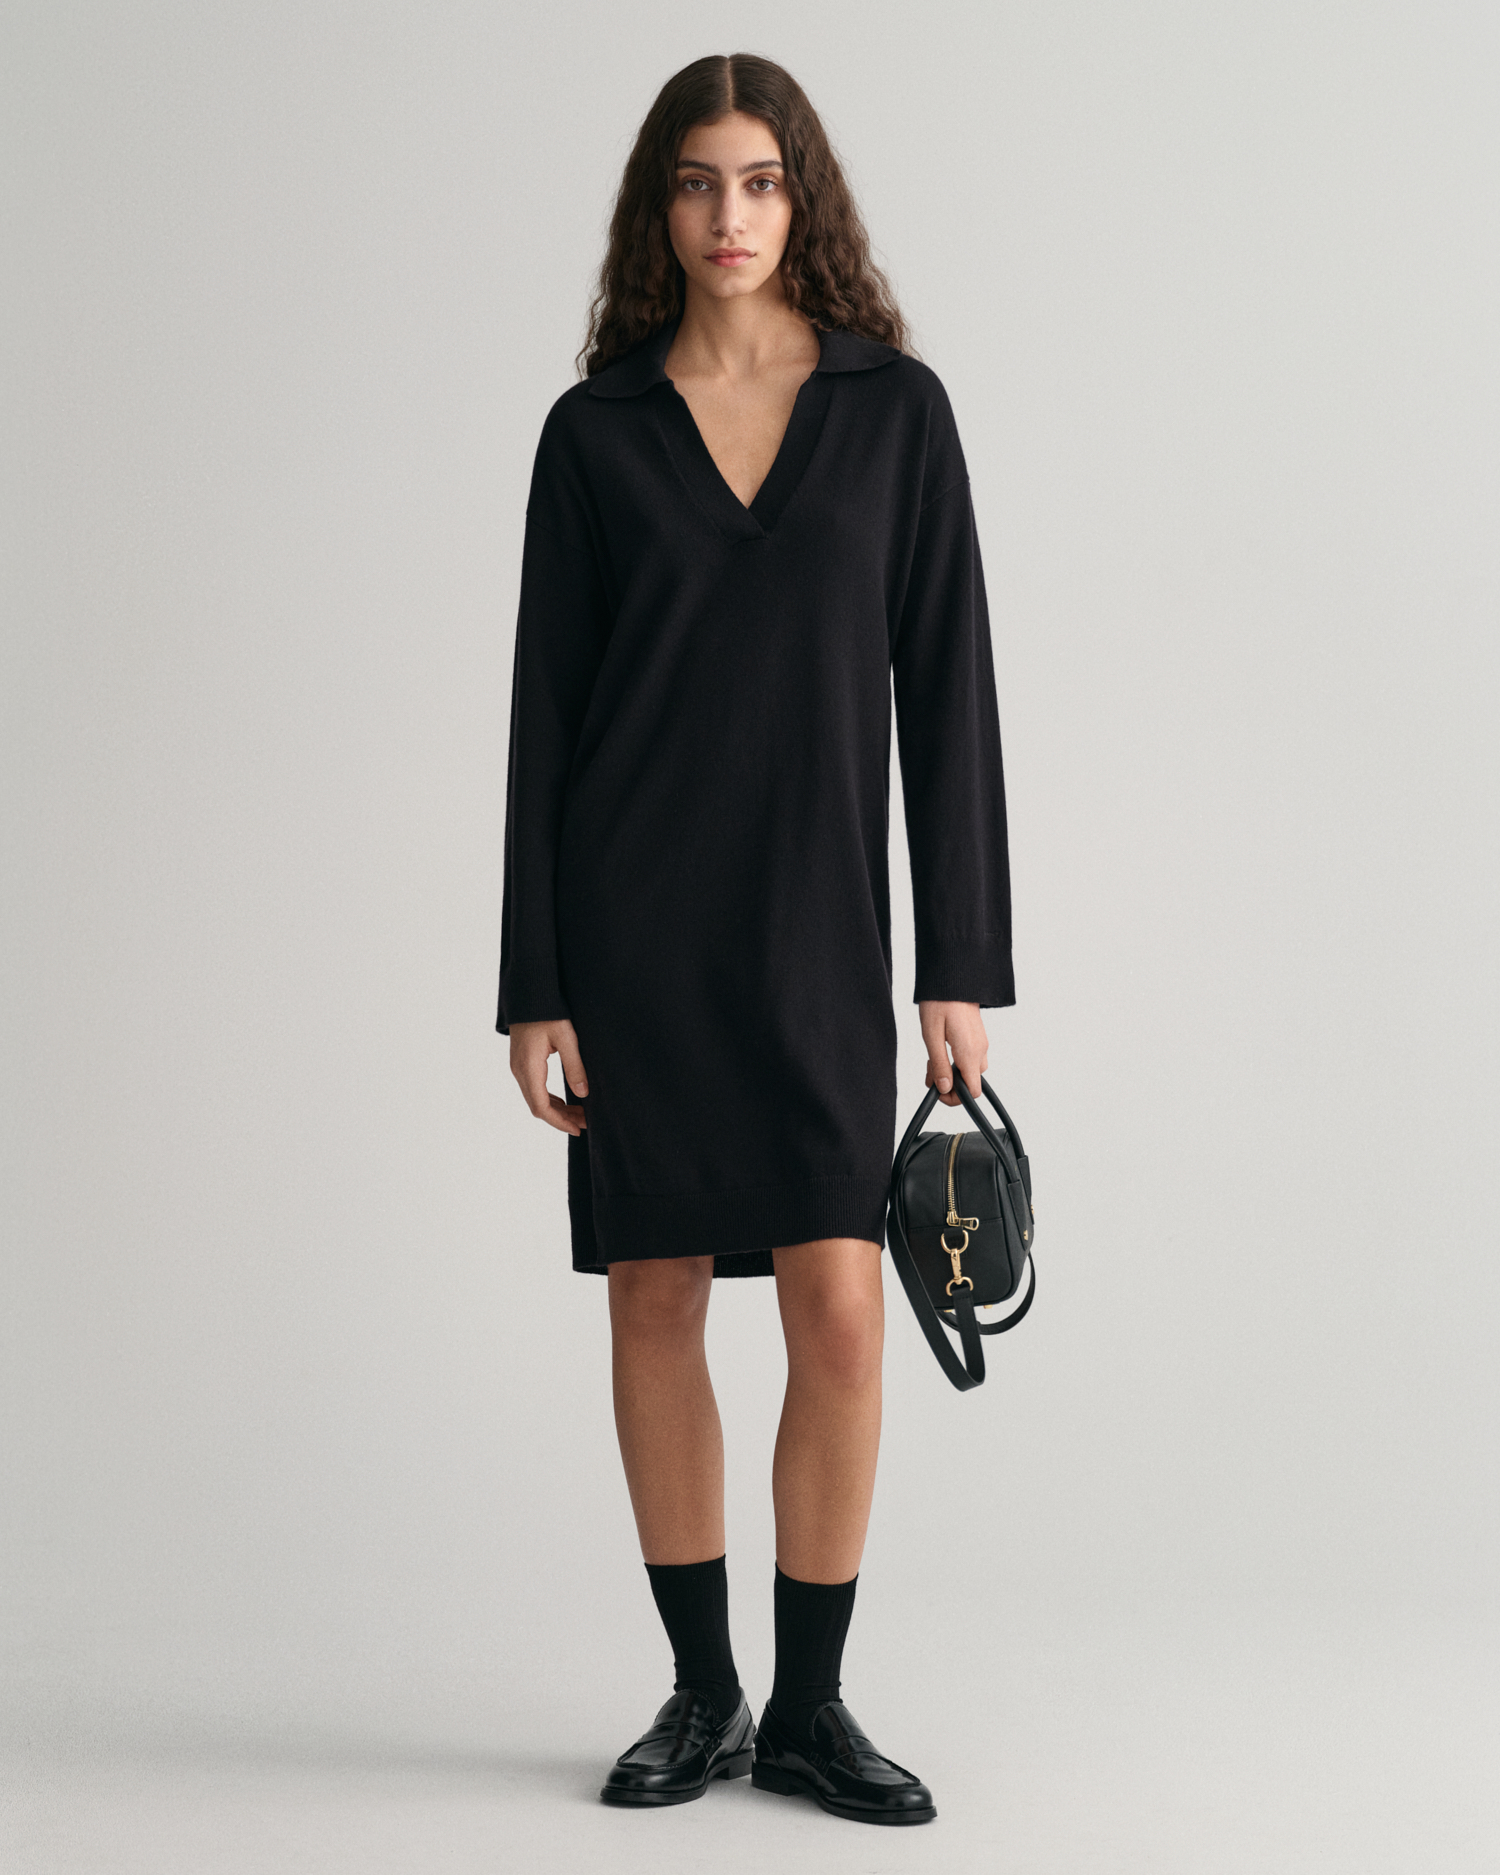 GANT Women Superfine Lambswool Rugger Dress (M) Black product